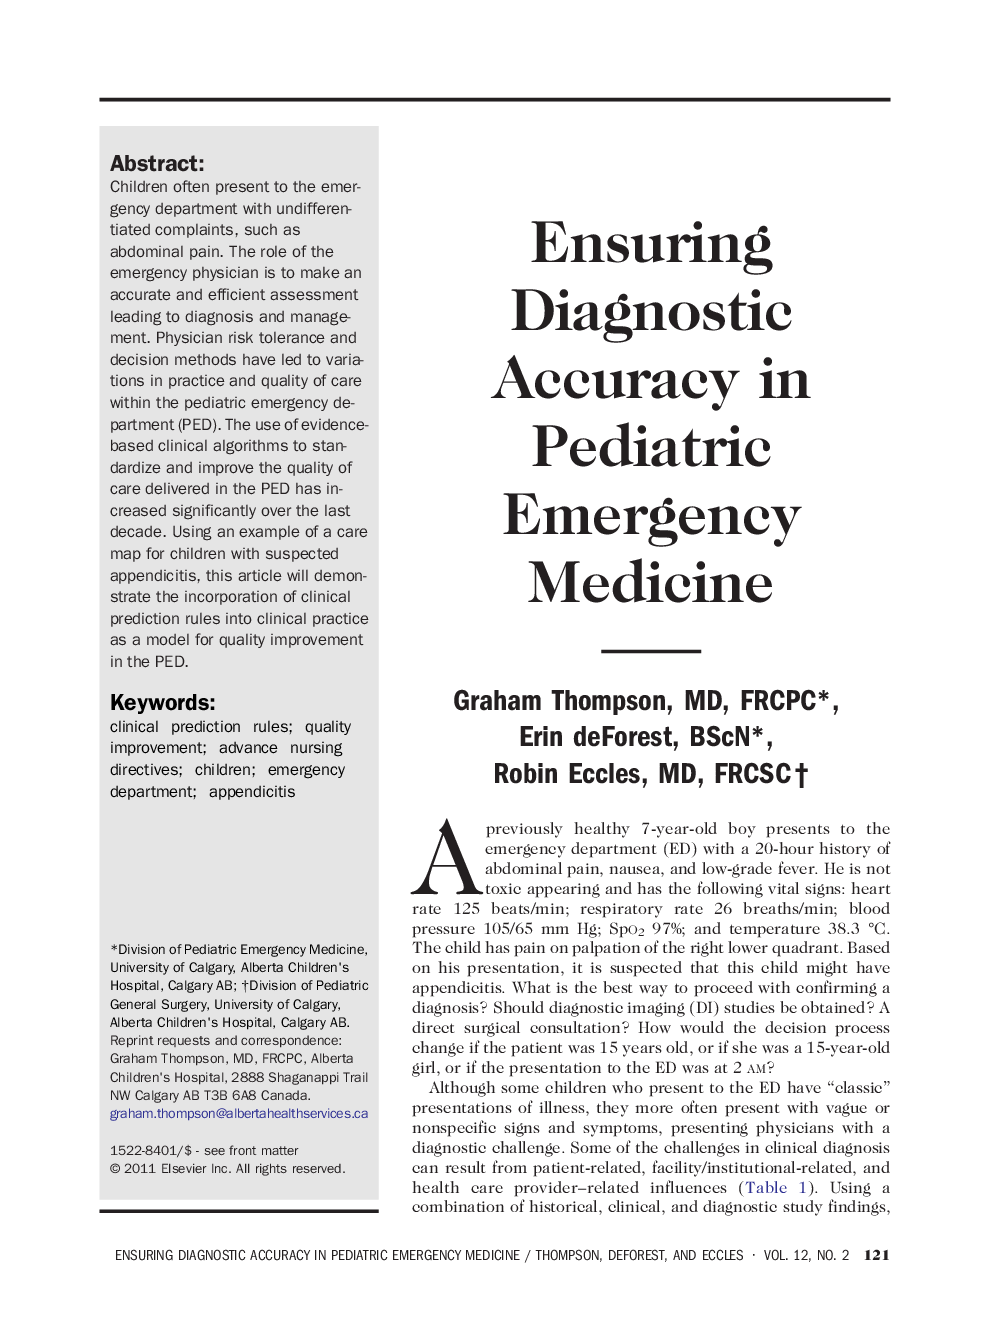 Ensuring Diagnostic Accuracy in Pediatric Emergency Medicine